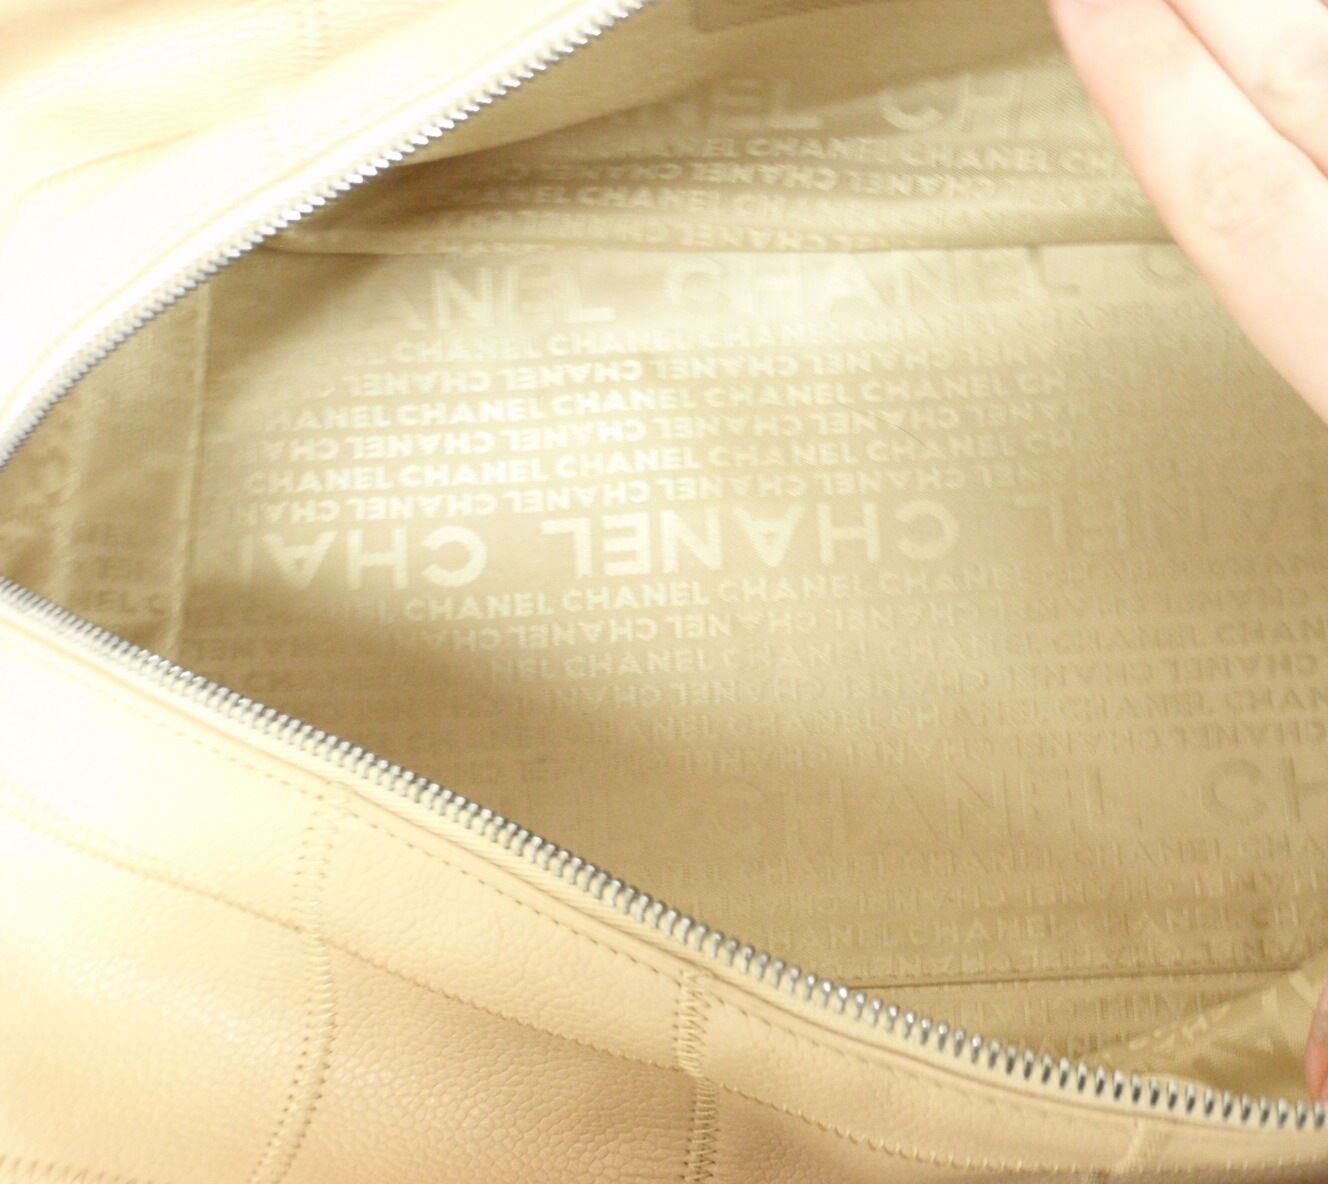 shoulder bag chanel handbags authentic